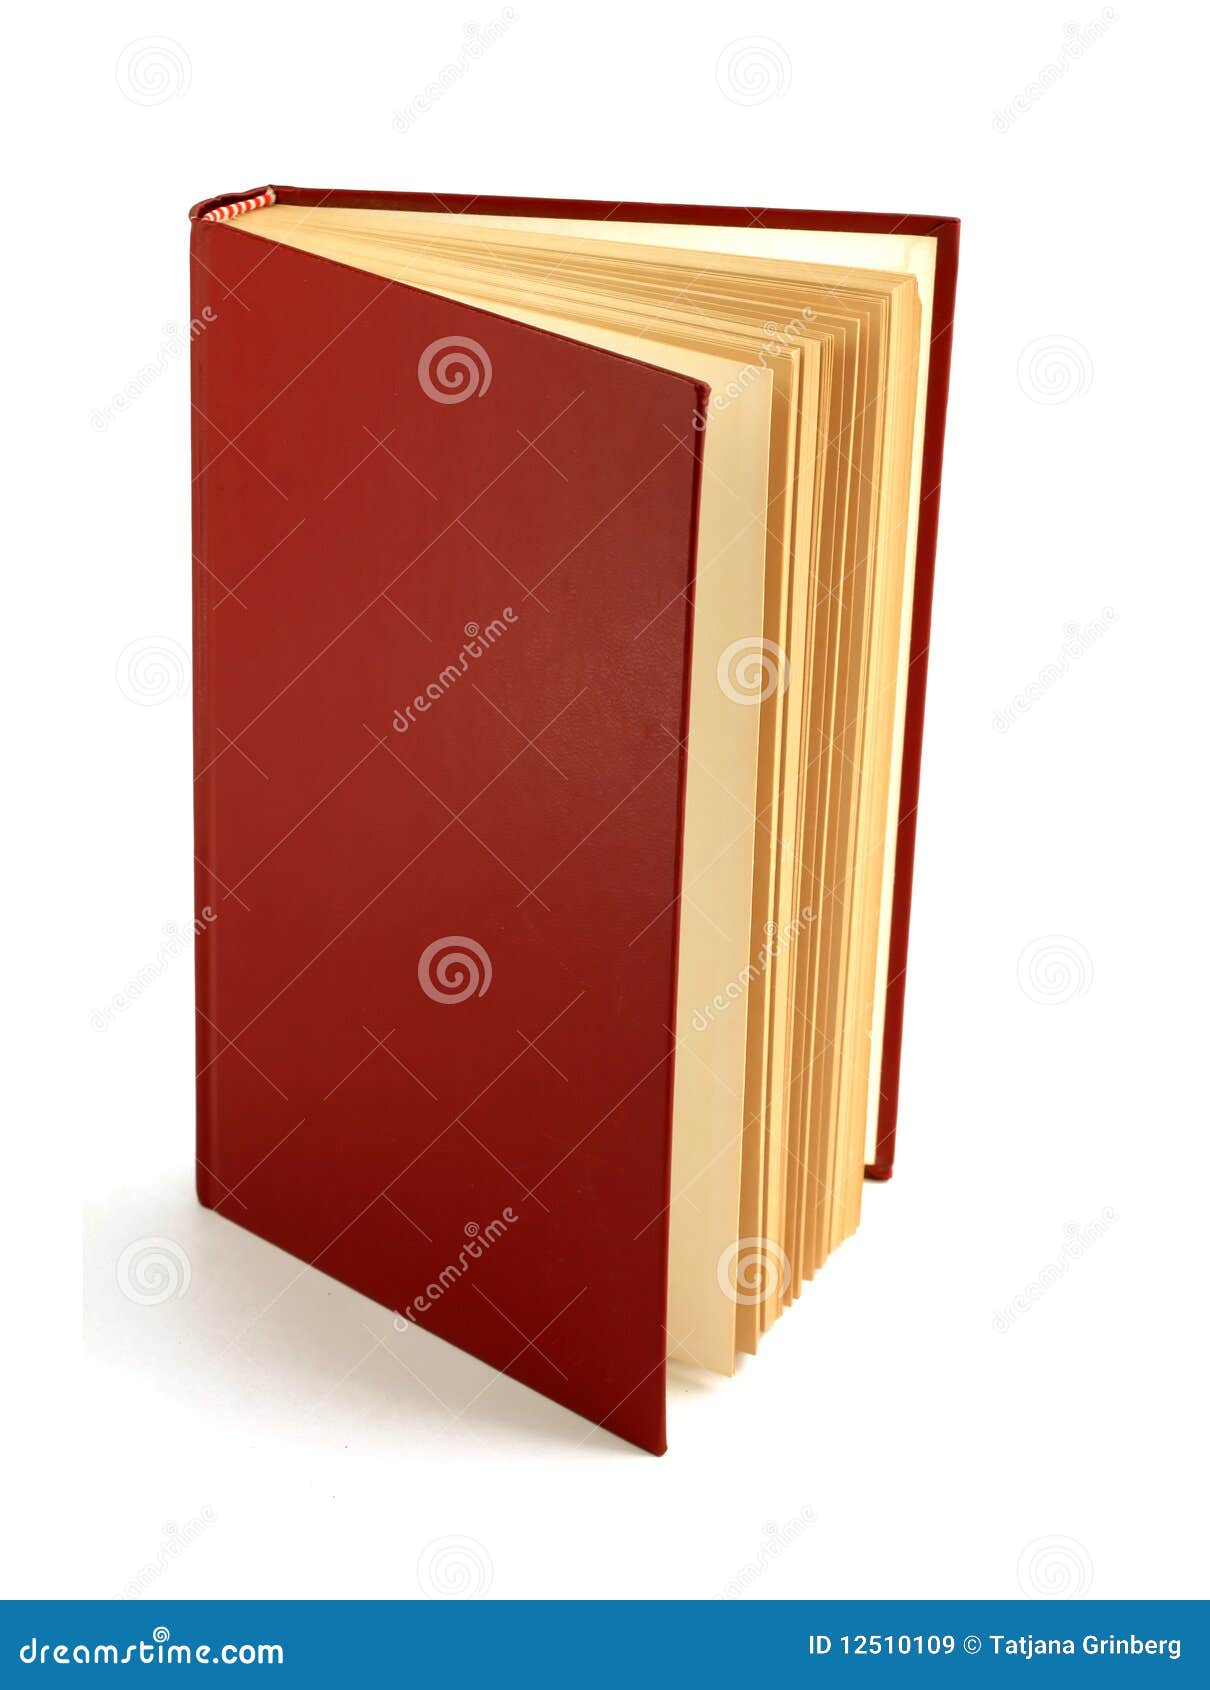 Book Isolated on White Background Stock Image - Image of background ...